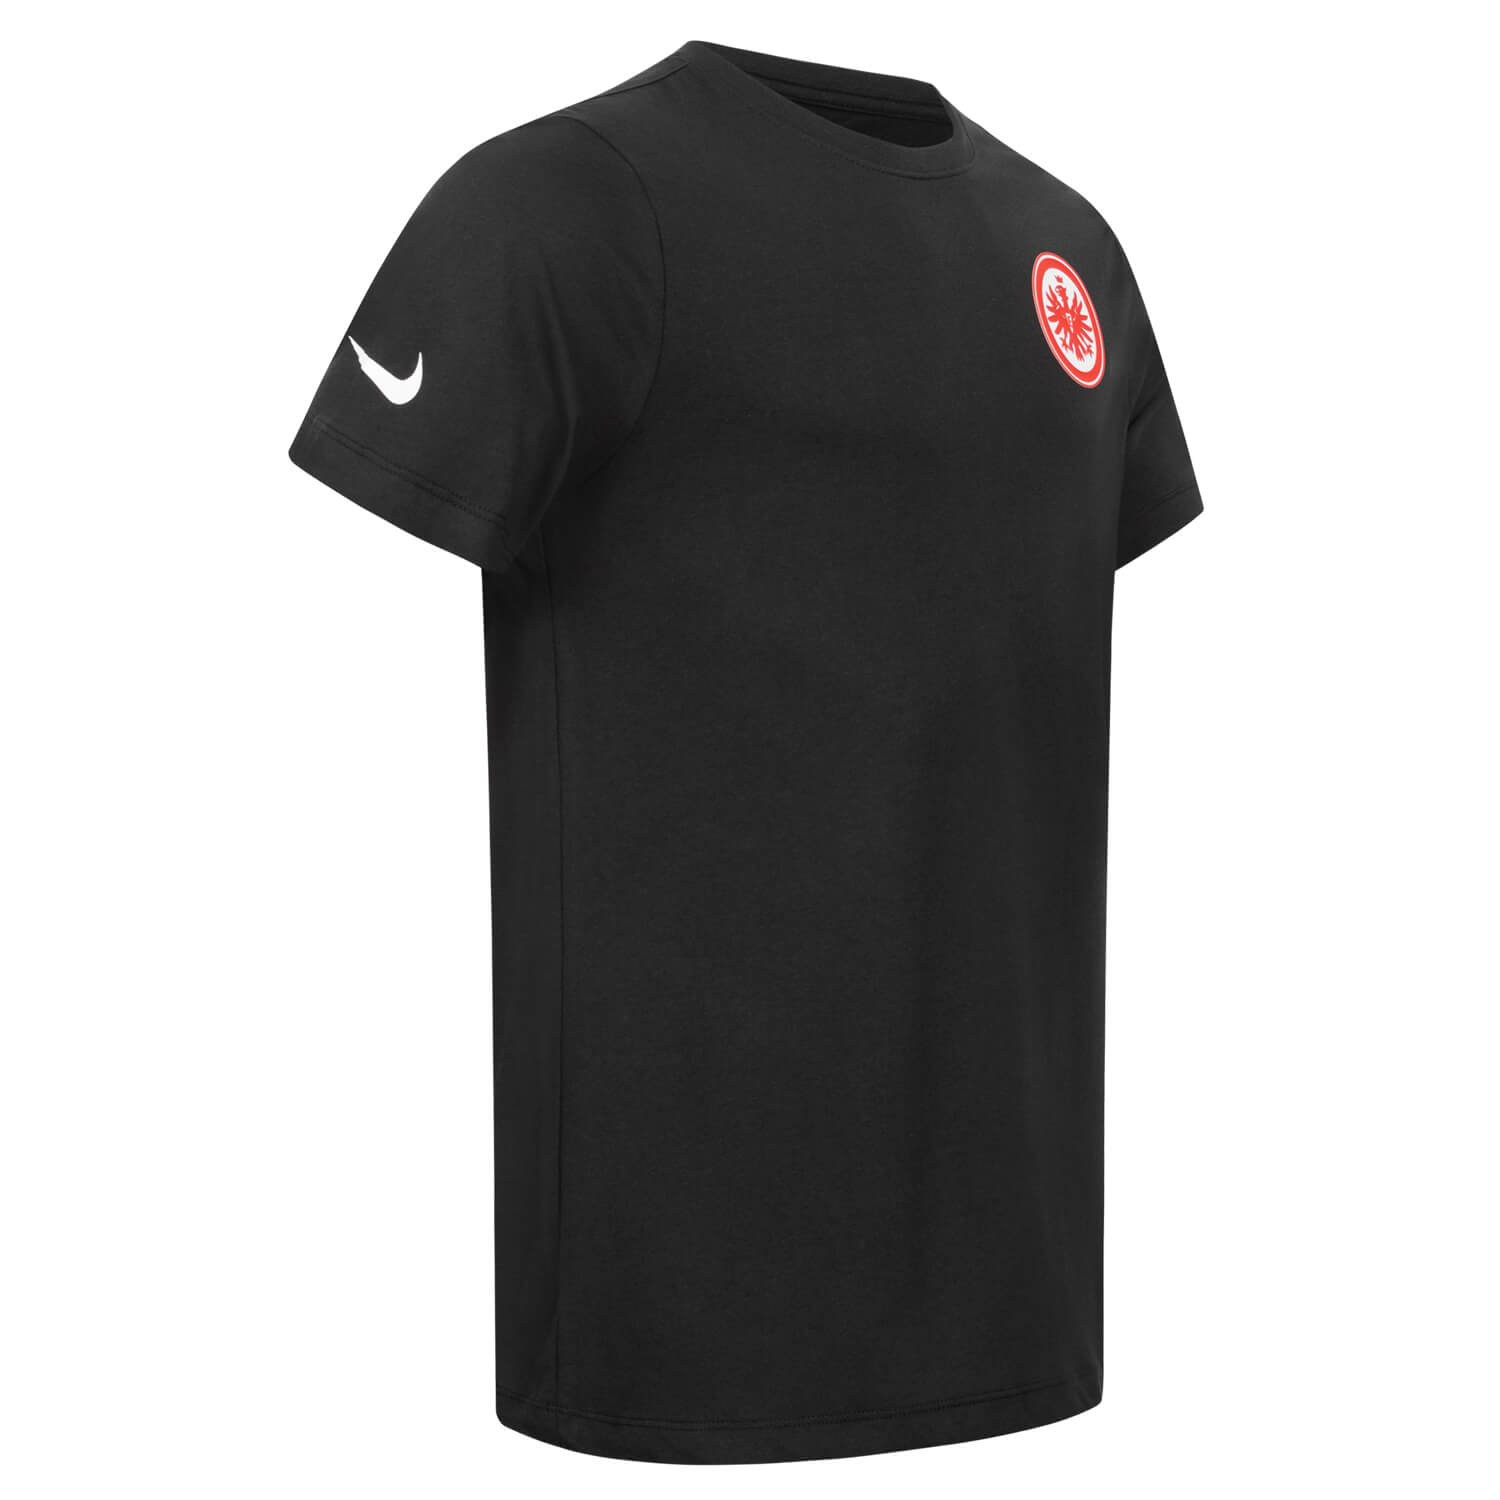 Bild 4: Nike T-Shirt Basic Schwarz 24